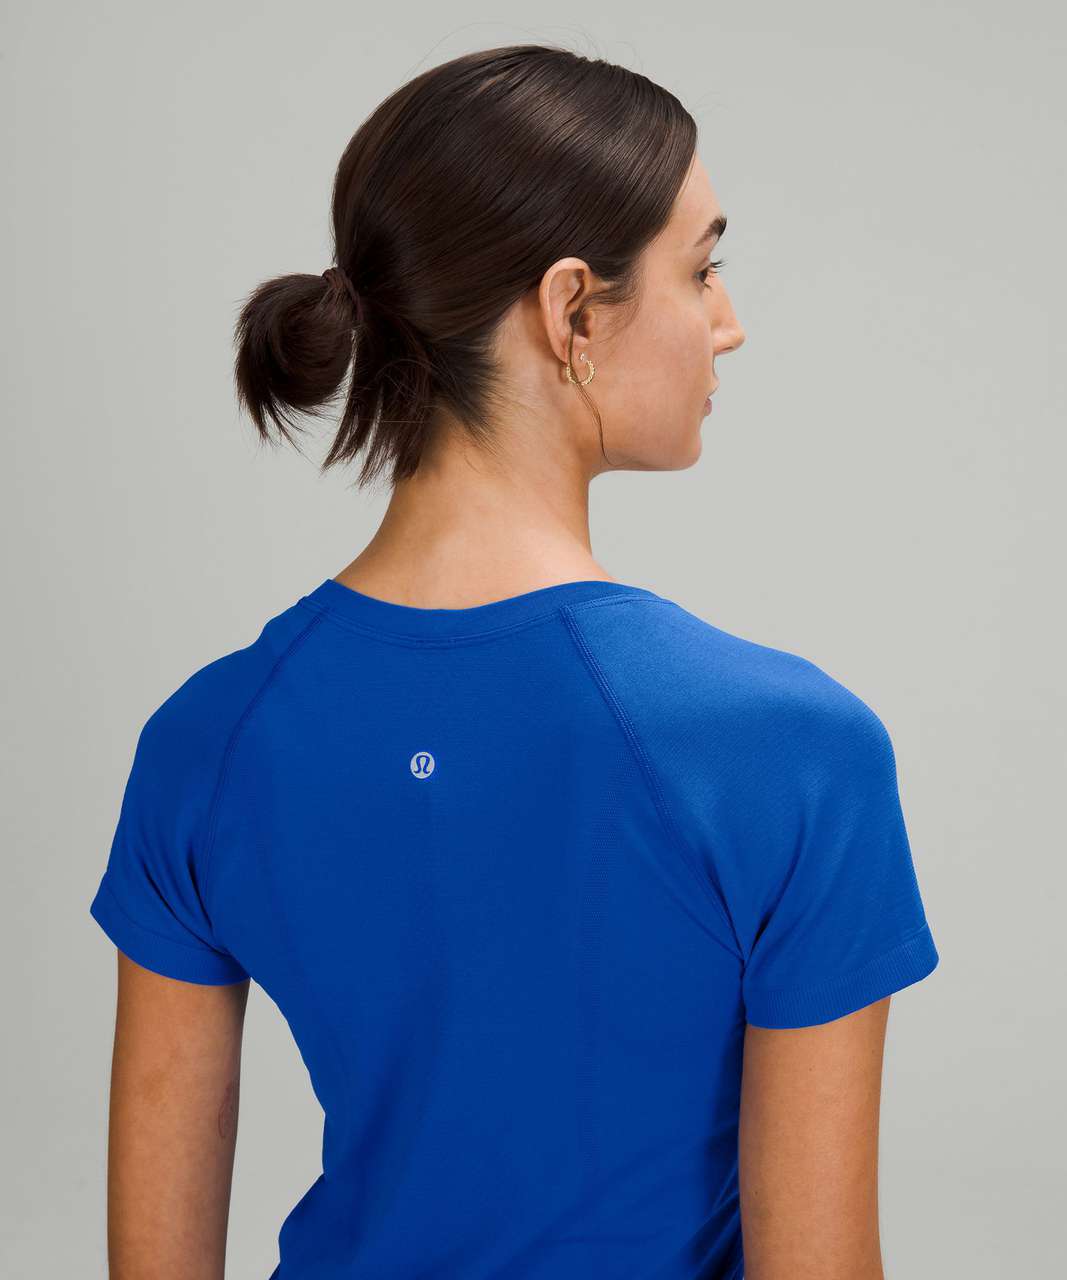 Lululemon Swiftly Tech Short Sleeve Shirt 2.0 - Blazer Blue Tone